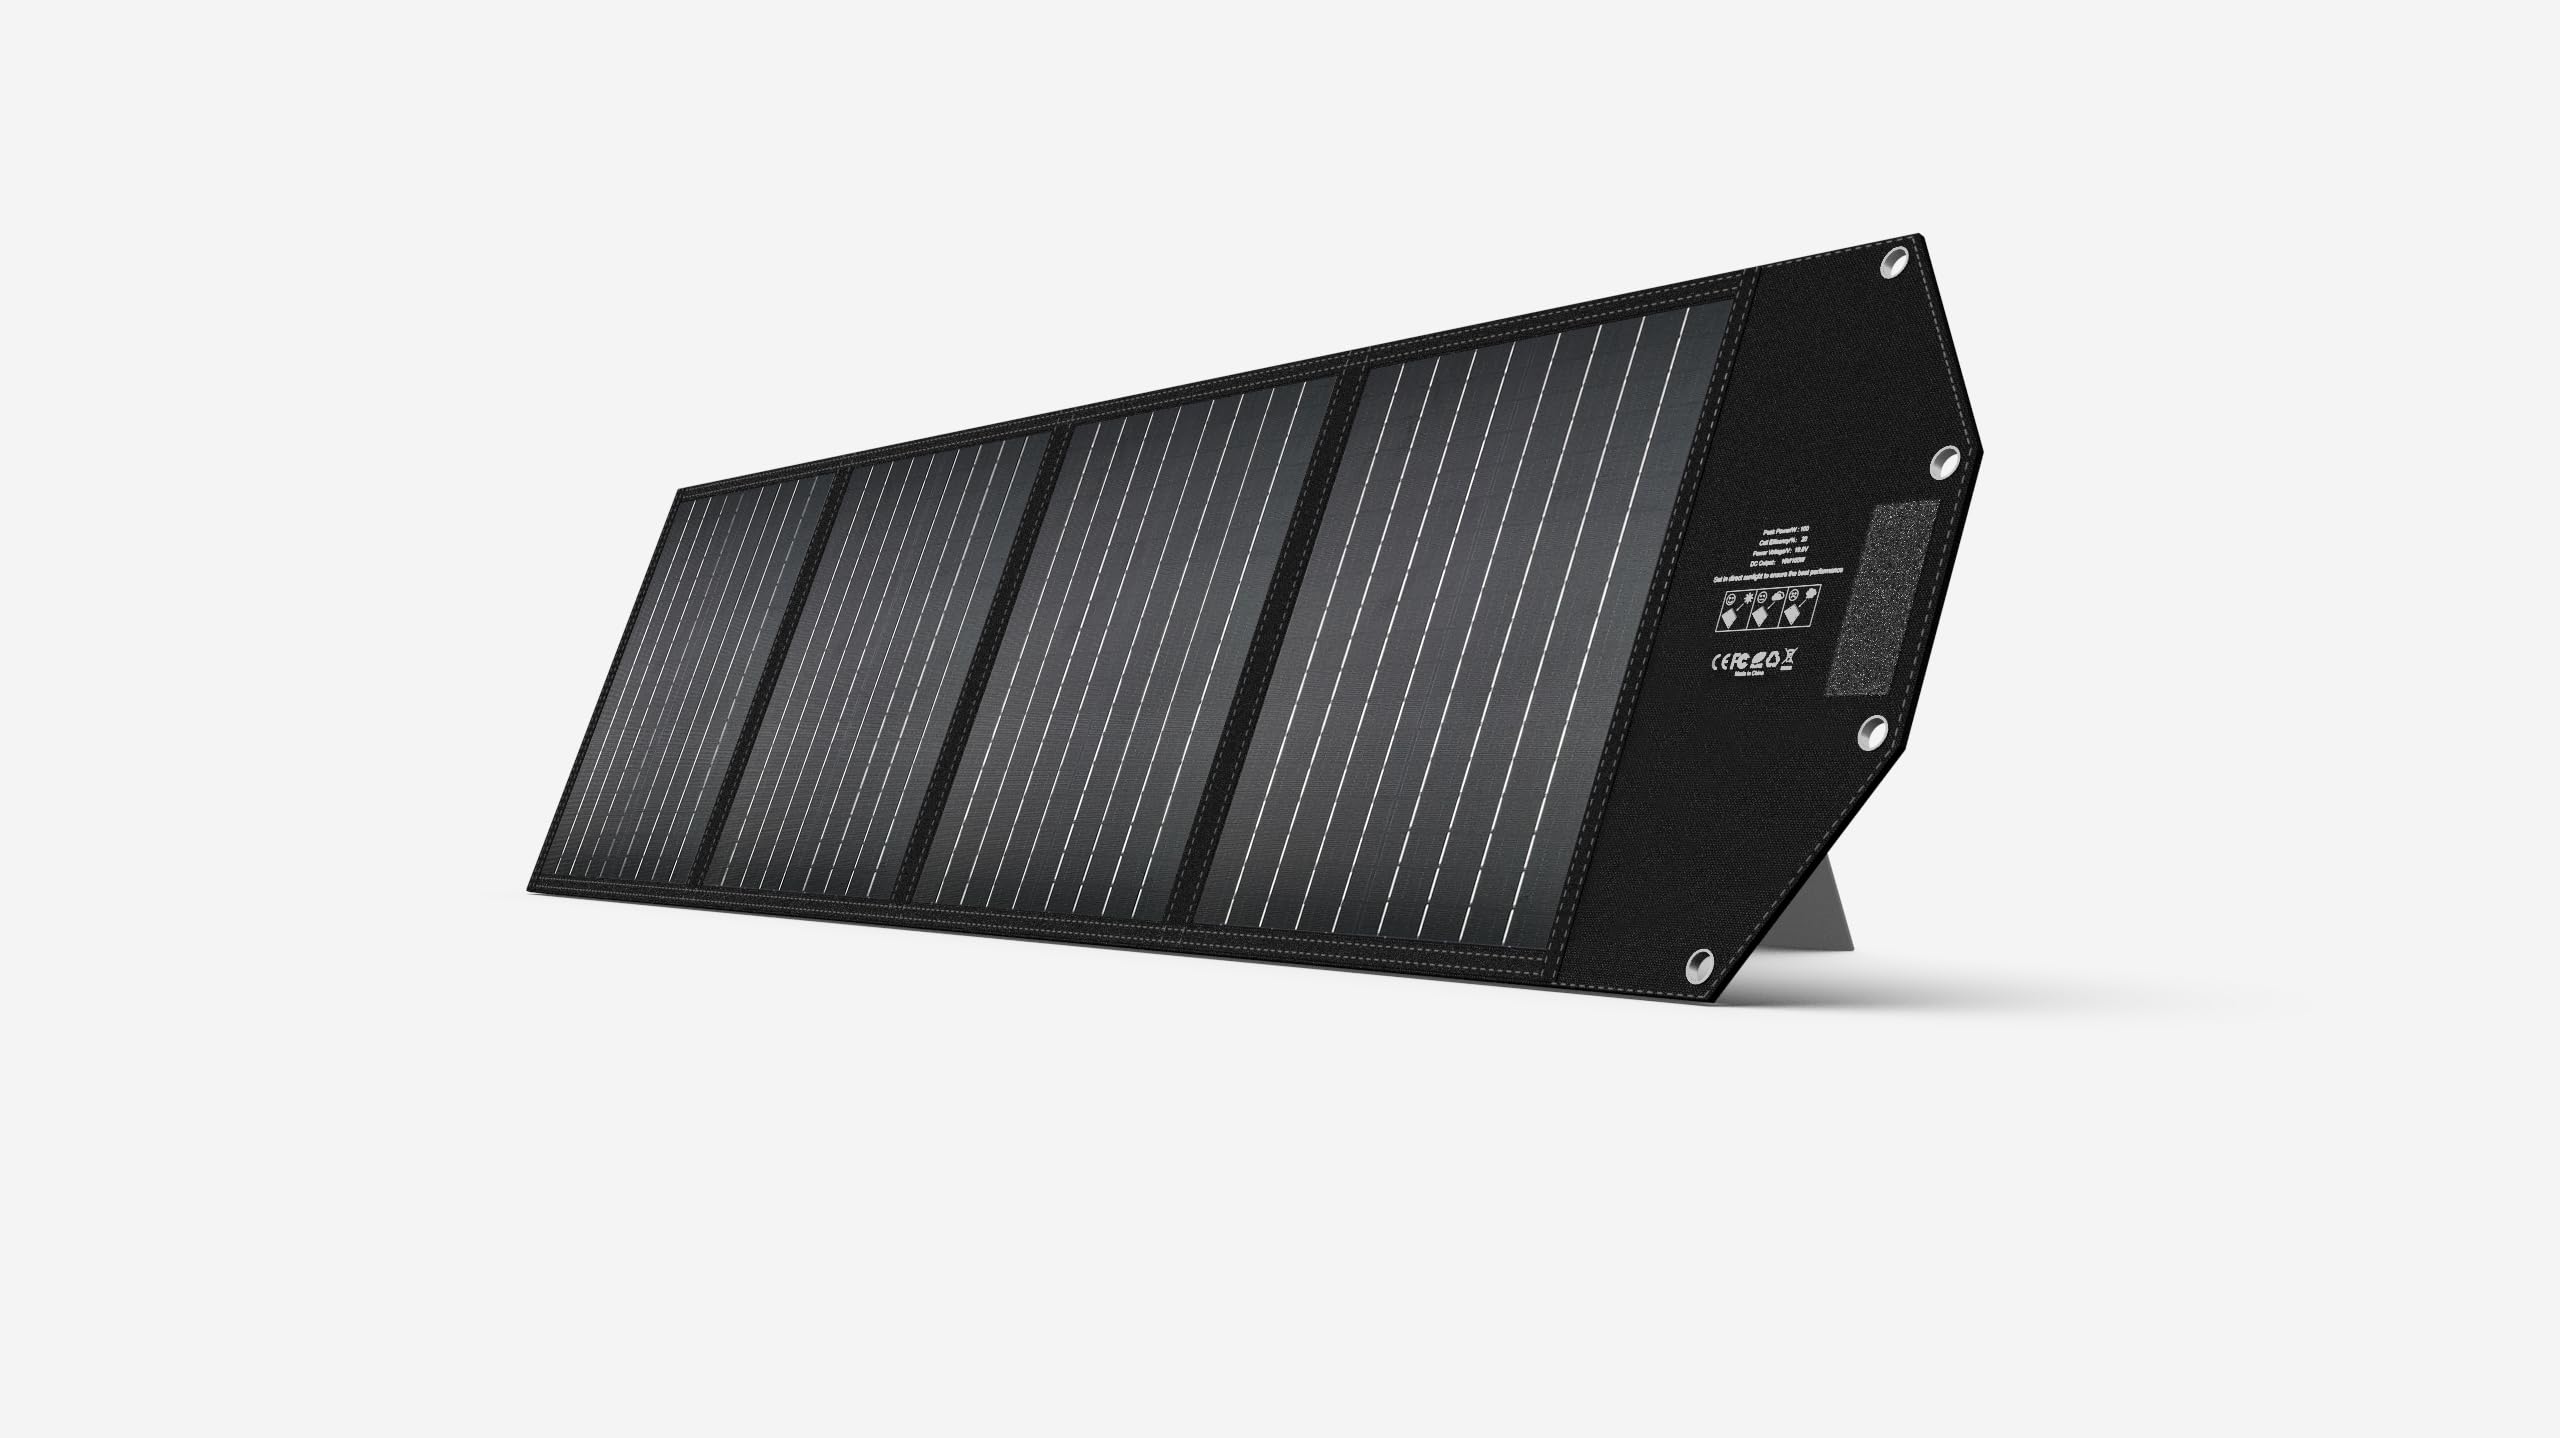 Komodo faltbares Solarmodul 220W kompatibel mit Powerstation, Camping Solarmodul Solartasche 18V outdoor mobil